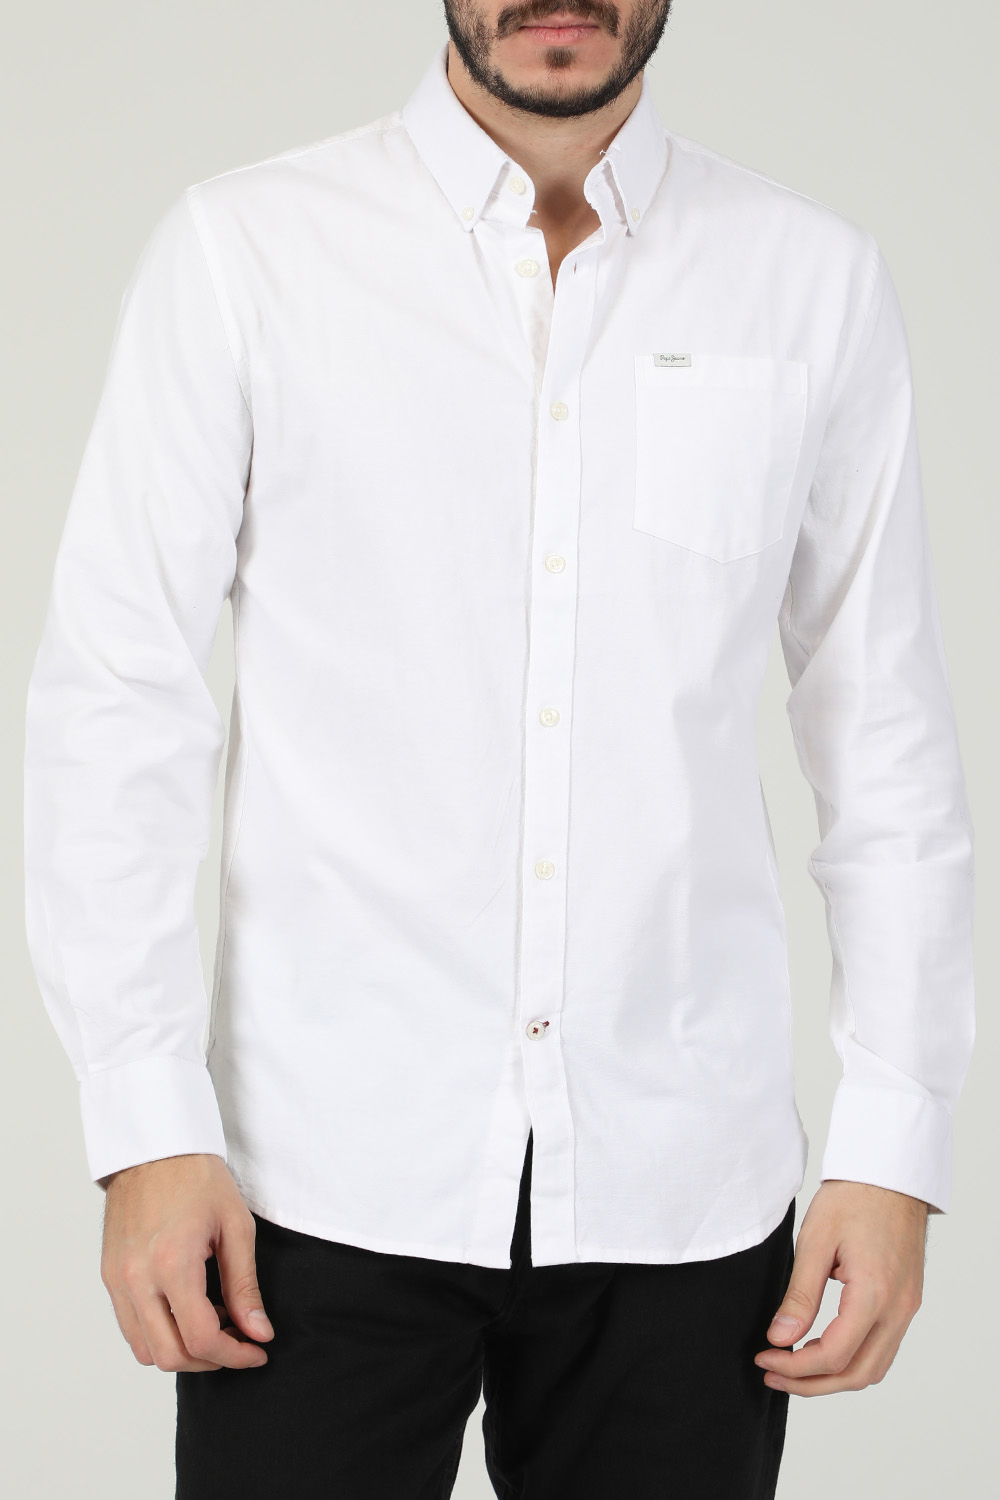 PEPE JEANS - Ανδρικό πουκάμισο PEPE JEANS JACKSON λευκό